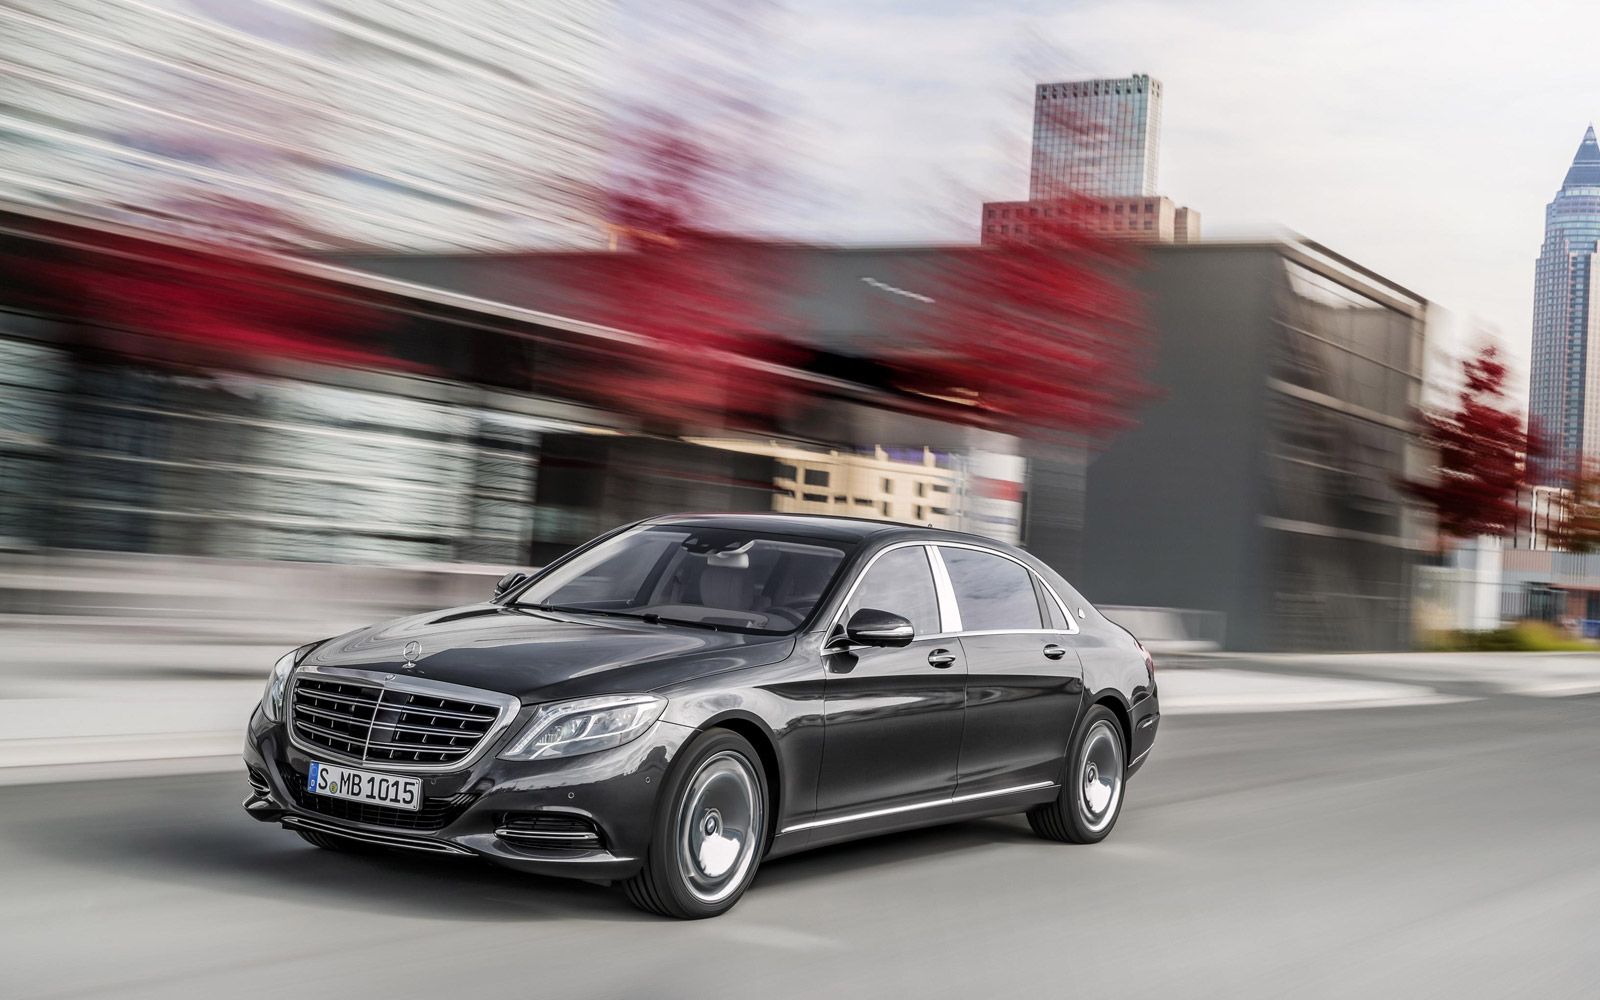 2021 Mercedes-Benz S-Class Wins Motor1 Star Award For Best Luxury Vehicle